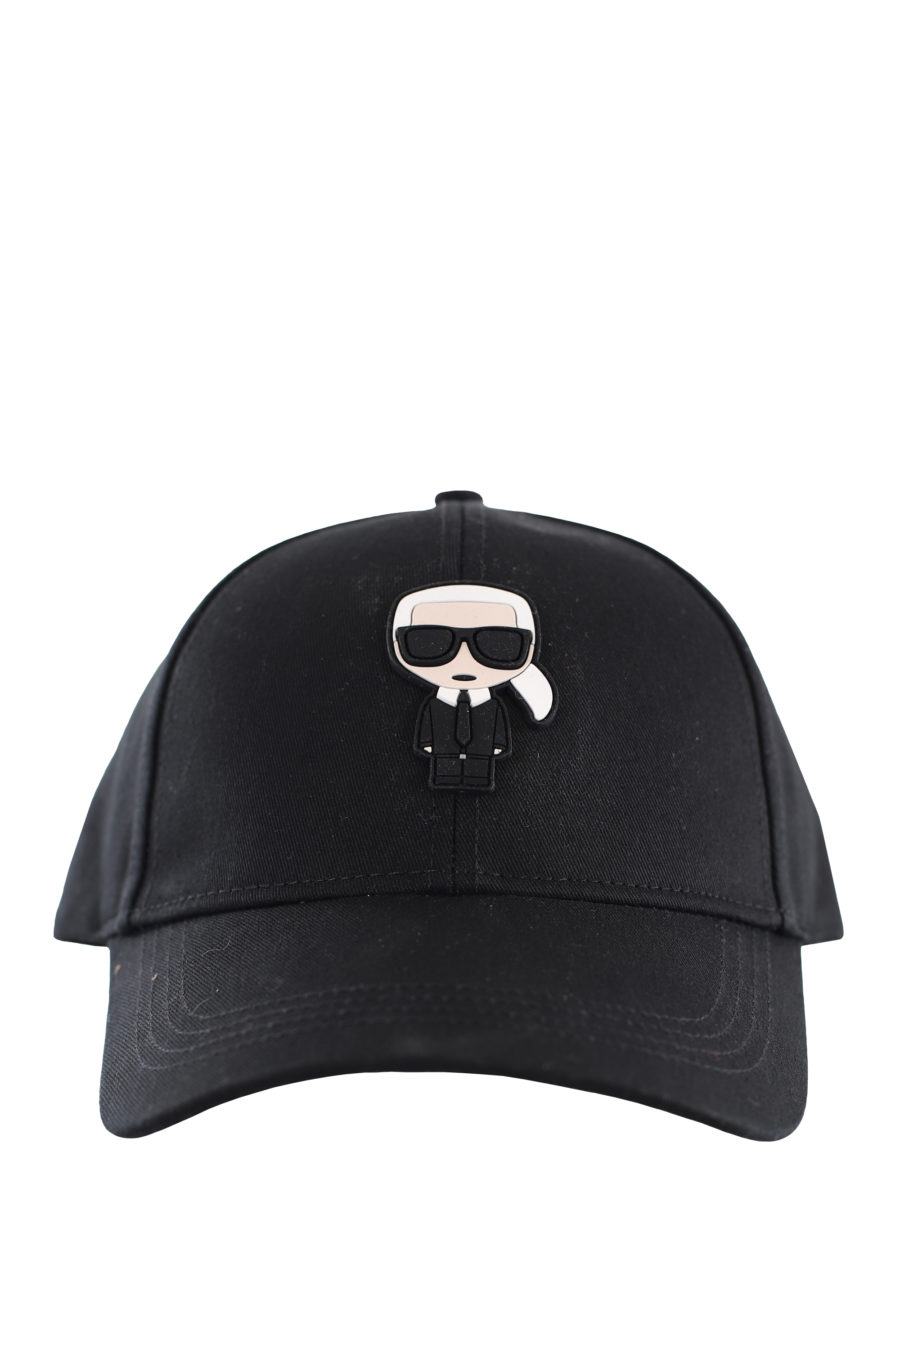 Gorra negra con logo "Karl" - IMG 1771